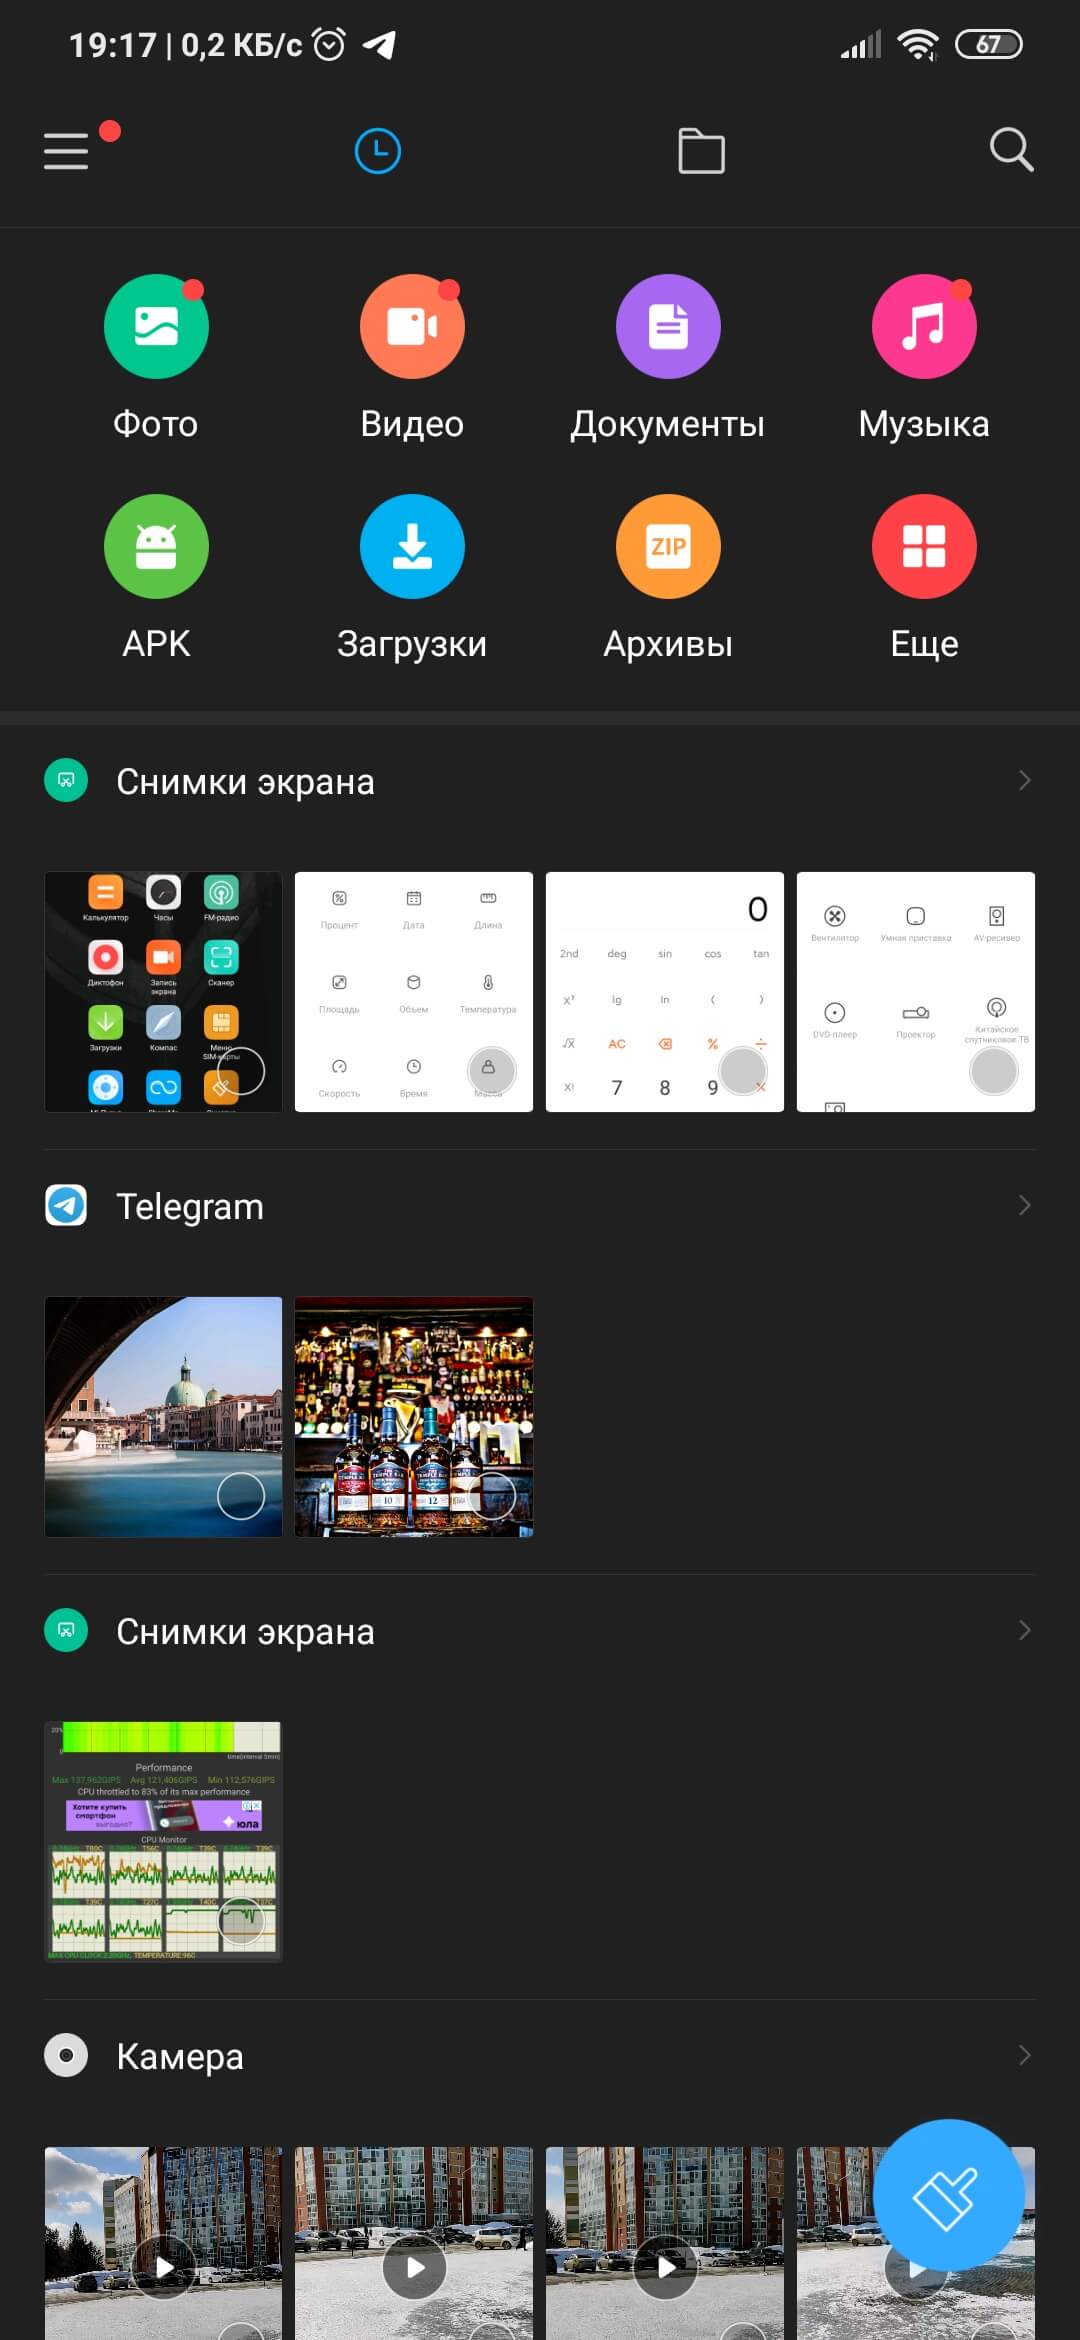  Обзор Xiaomi Mi 9 Lite: младшая модель со своими особенностями Xiaomi  - xiaomi_mi_9_lite_mladshij_brat_s_unikalnoj_fishkoj_picture27_11